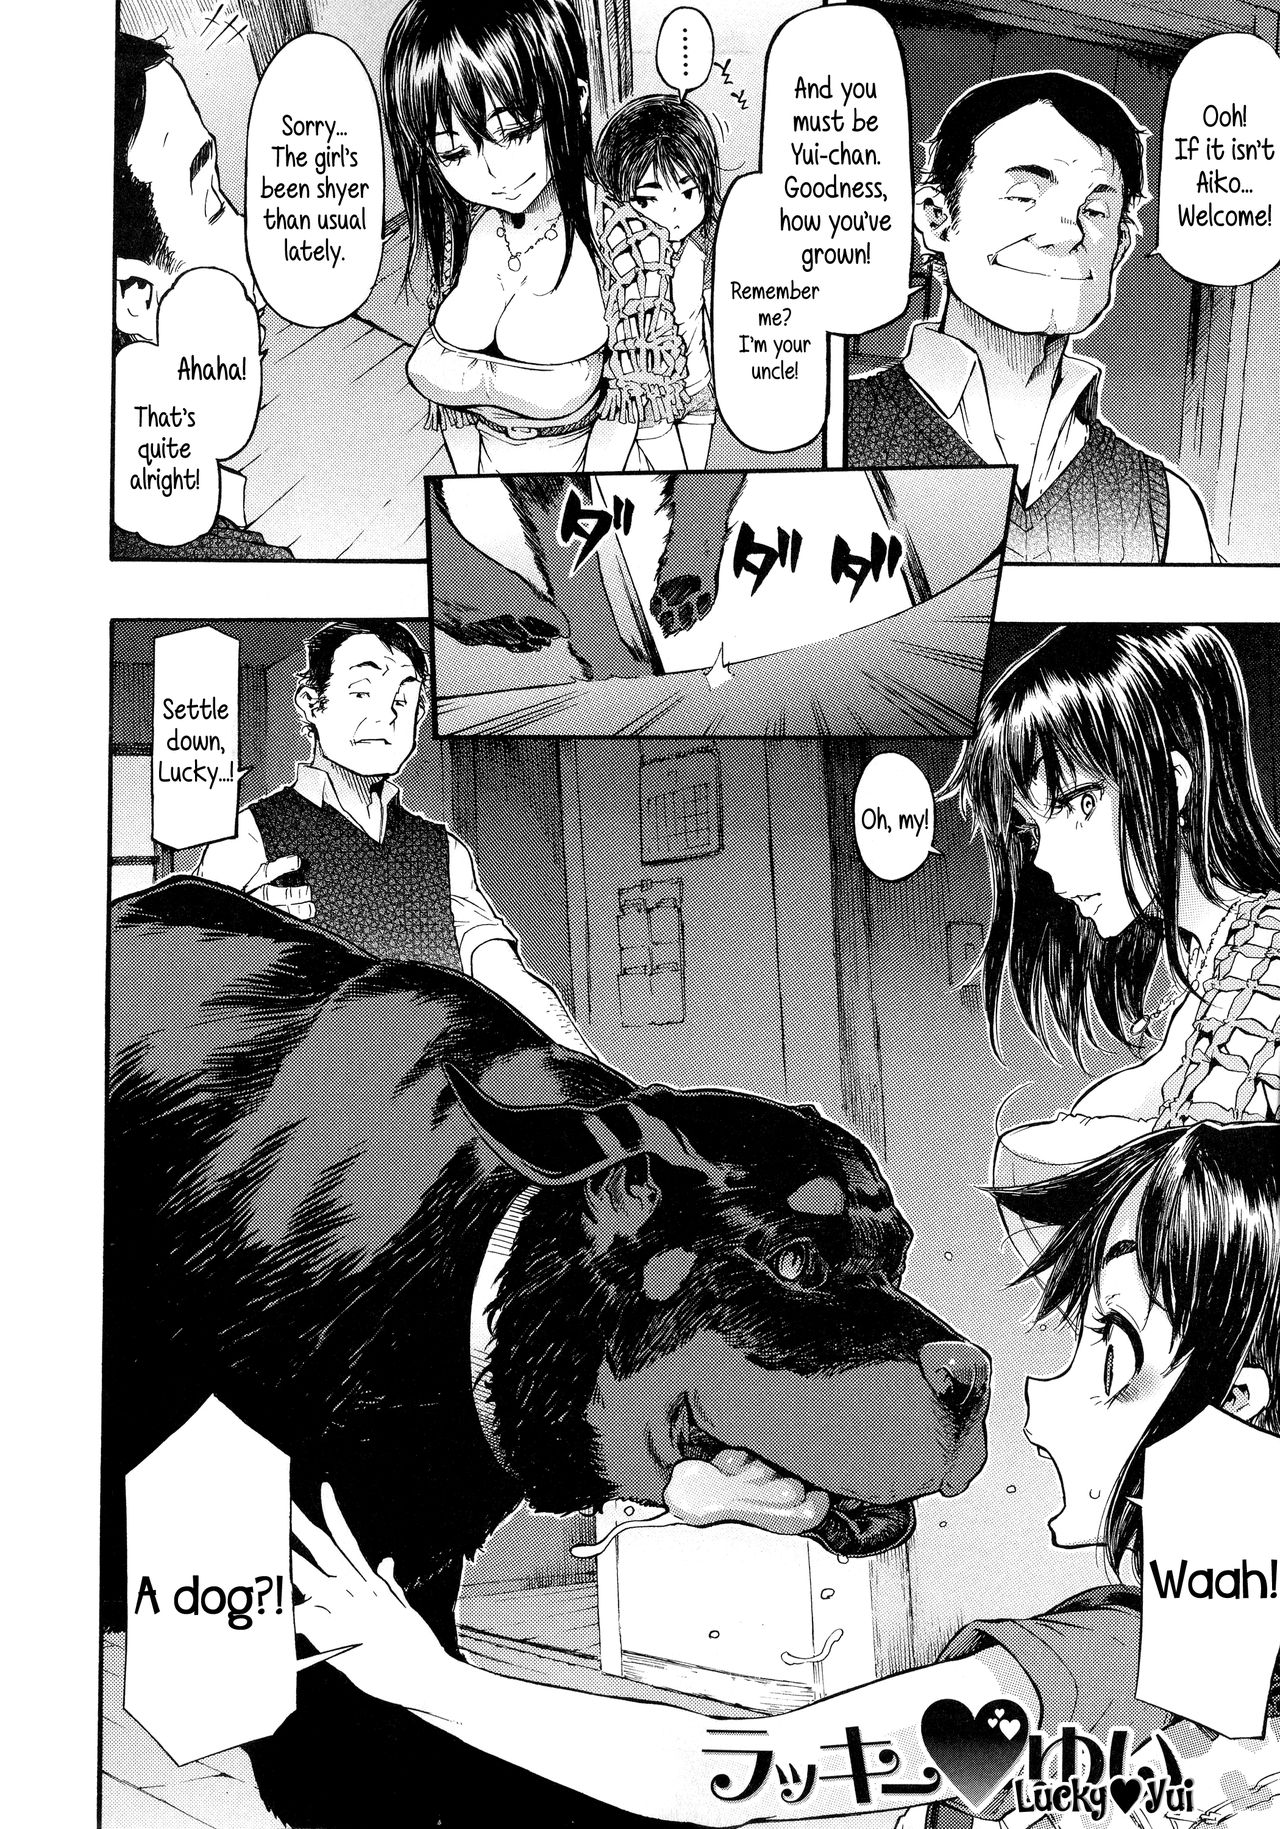 A loli dog bestiality hentai manga by ShindoL. 